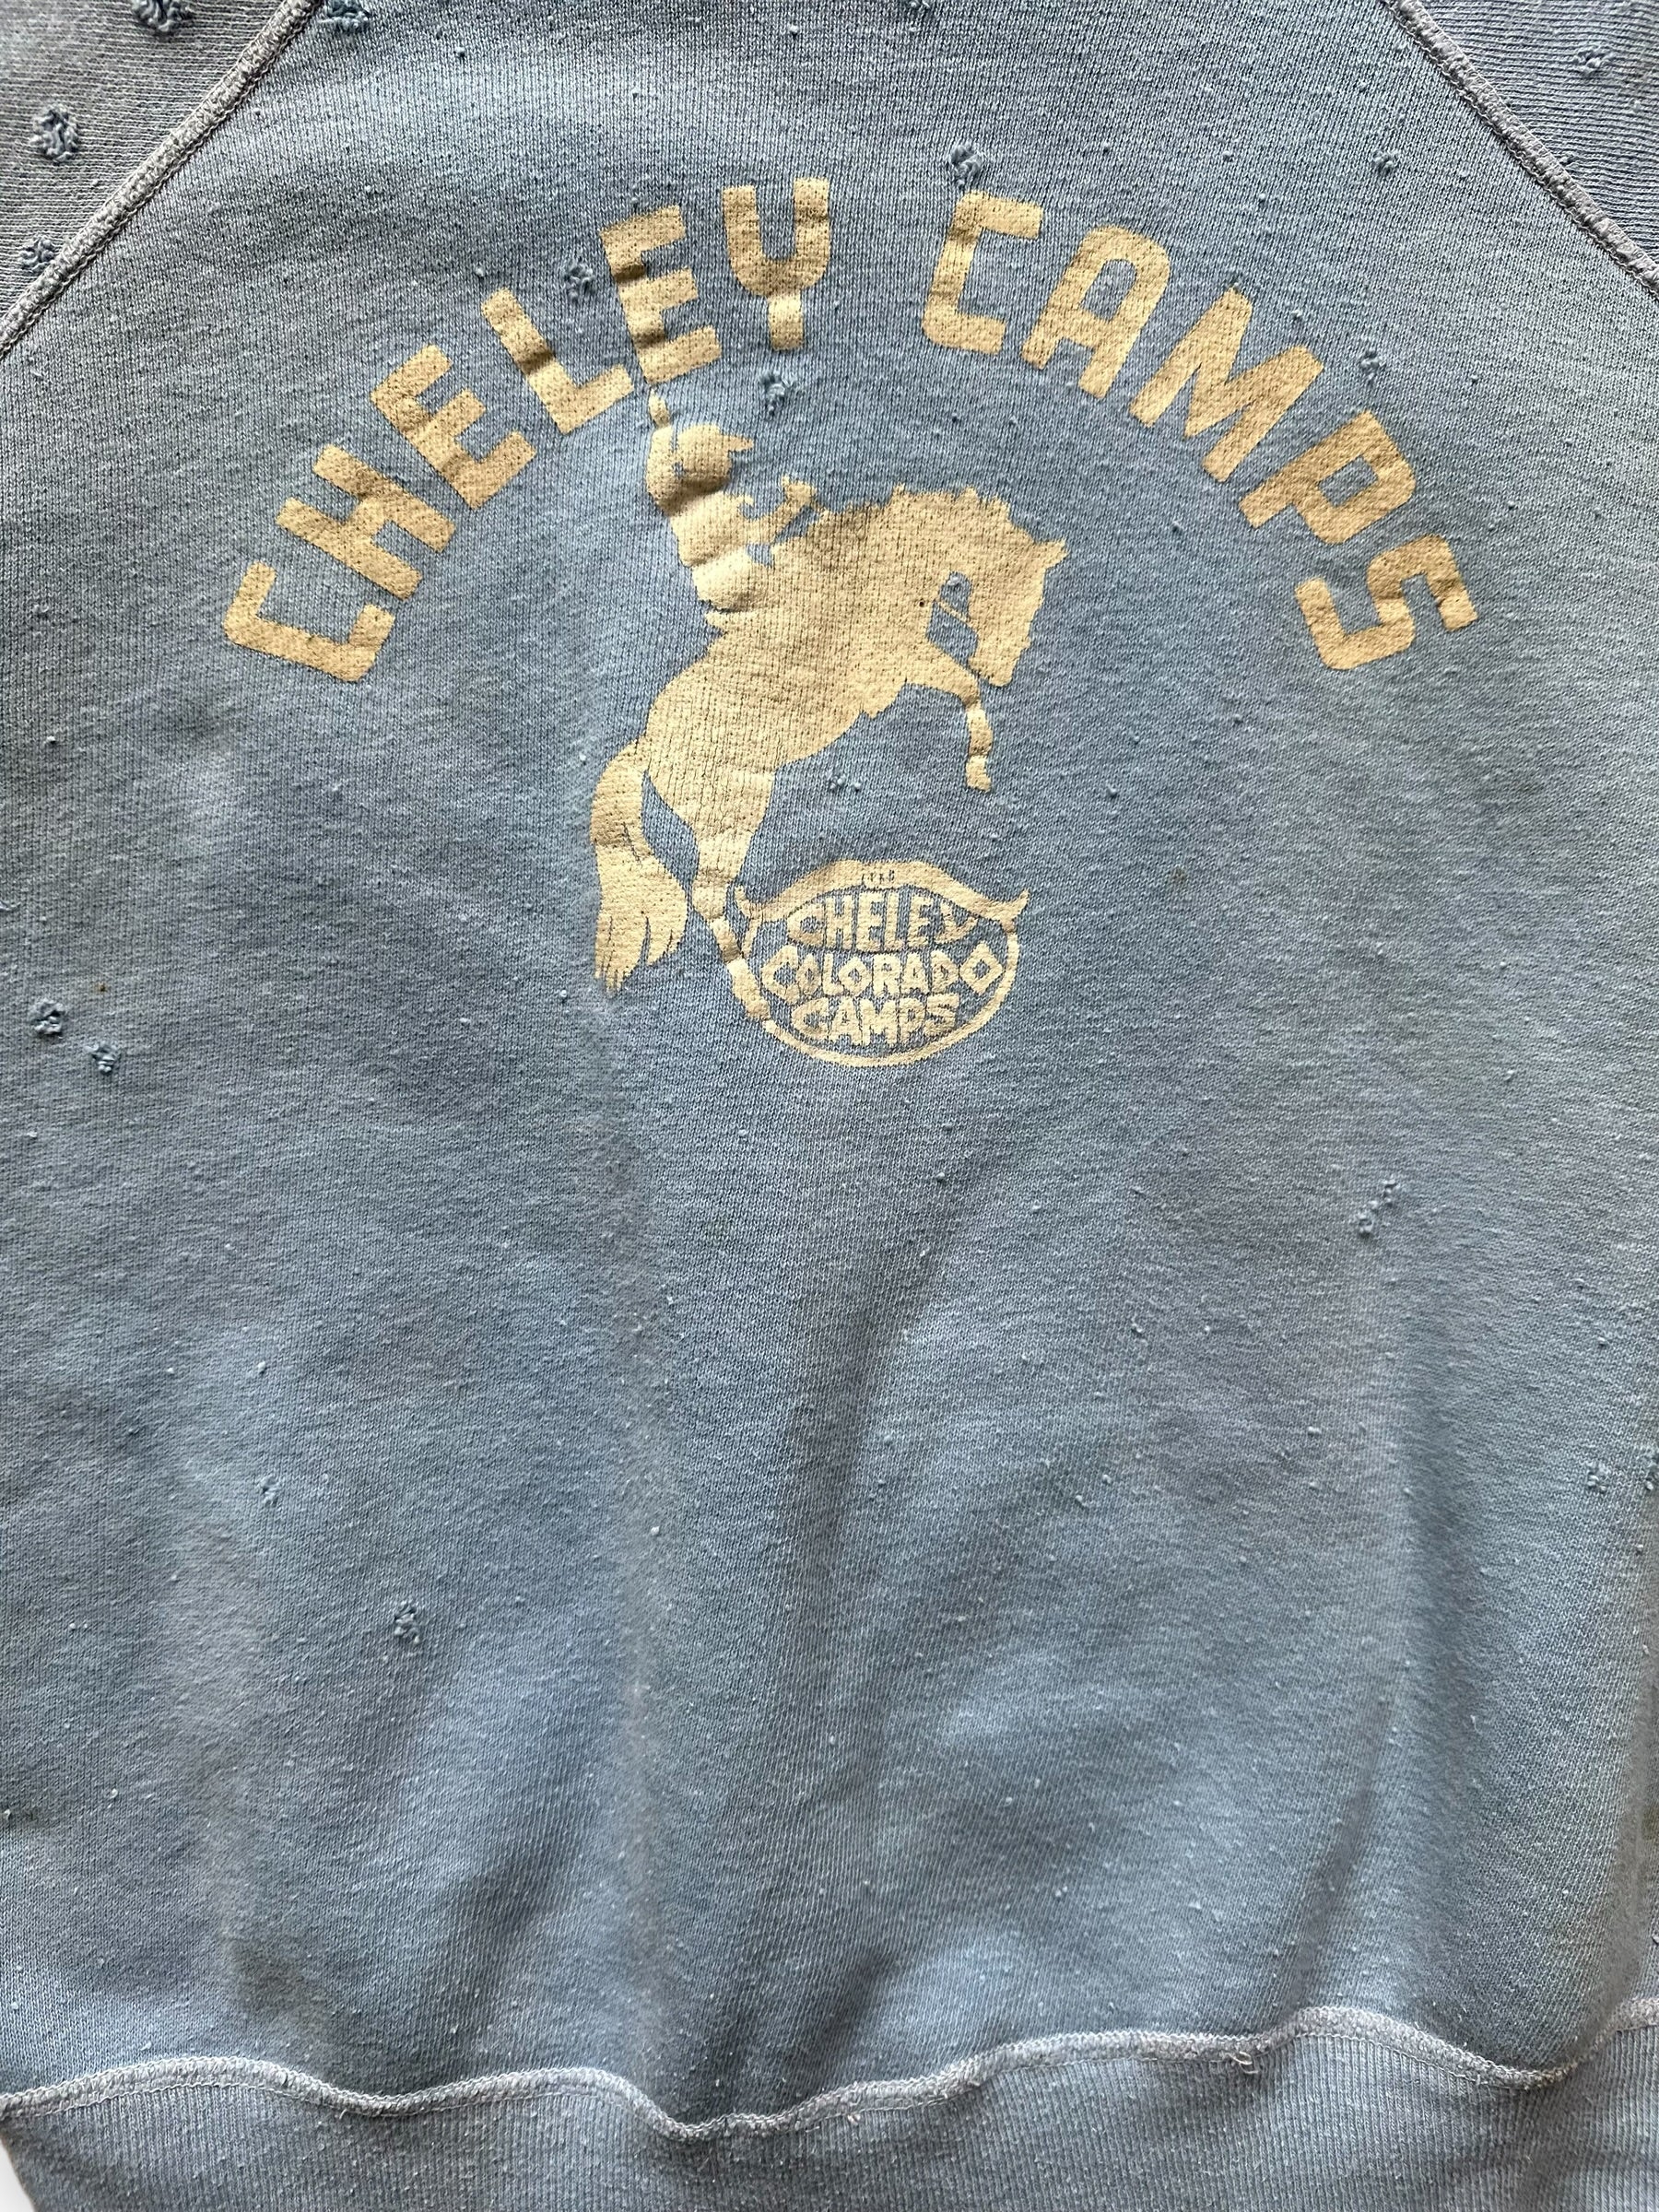 Front Graphic Detail on Vintage Distressed Cheley Camps Colorado Crewneck Sweatshirt | Vintage Crewneck Seattle | Barn Owl Vintage Clothing